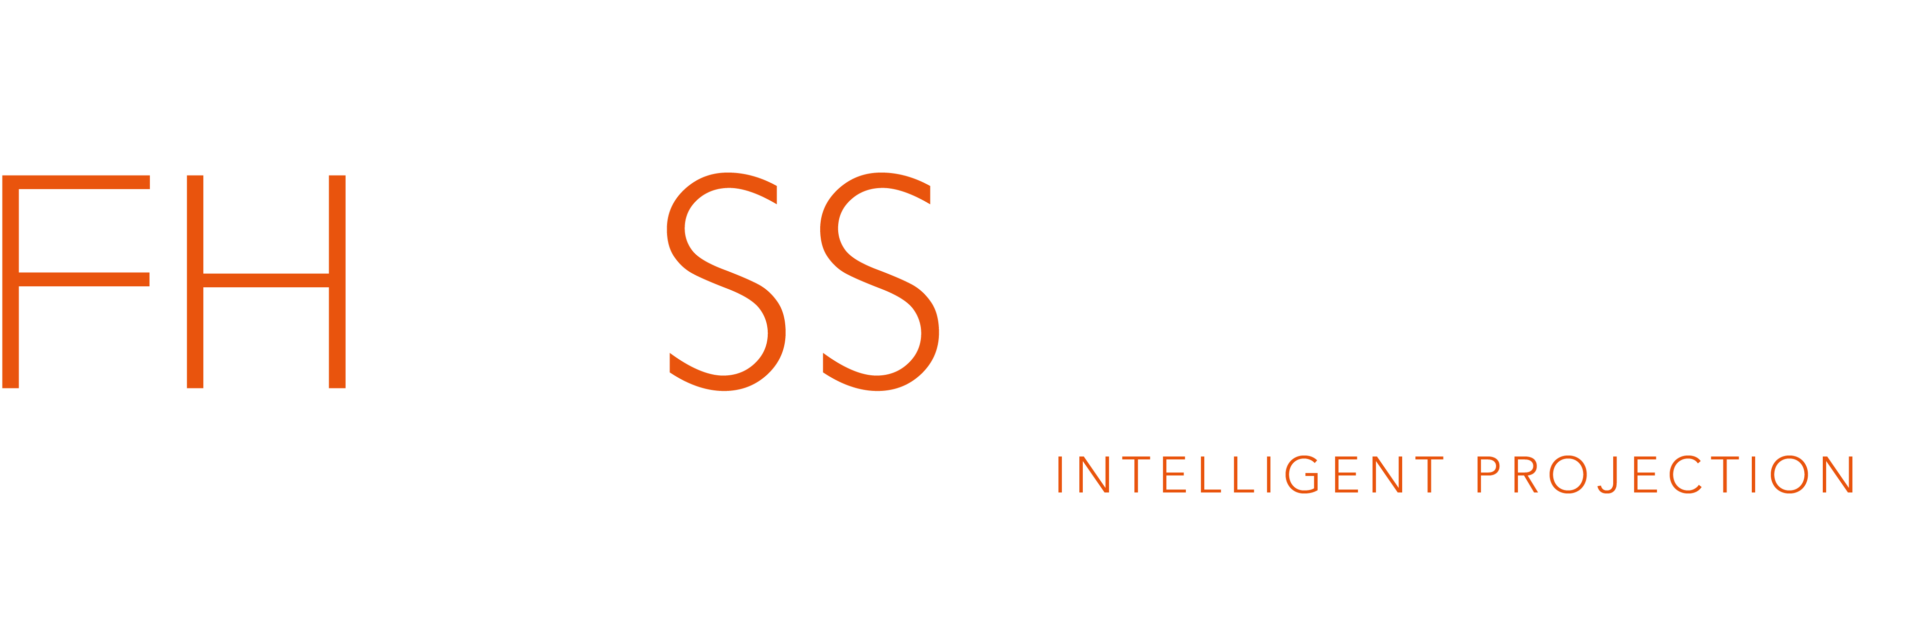 CAST Intelligent Projection logo